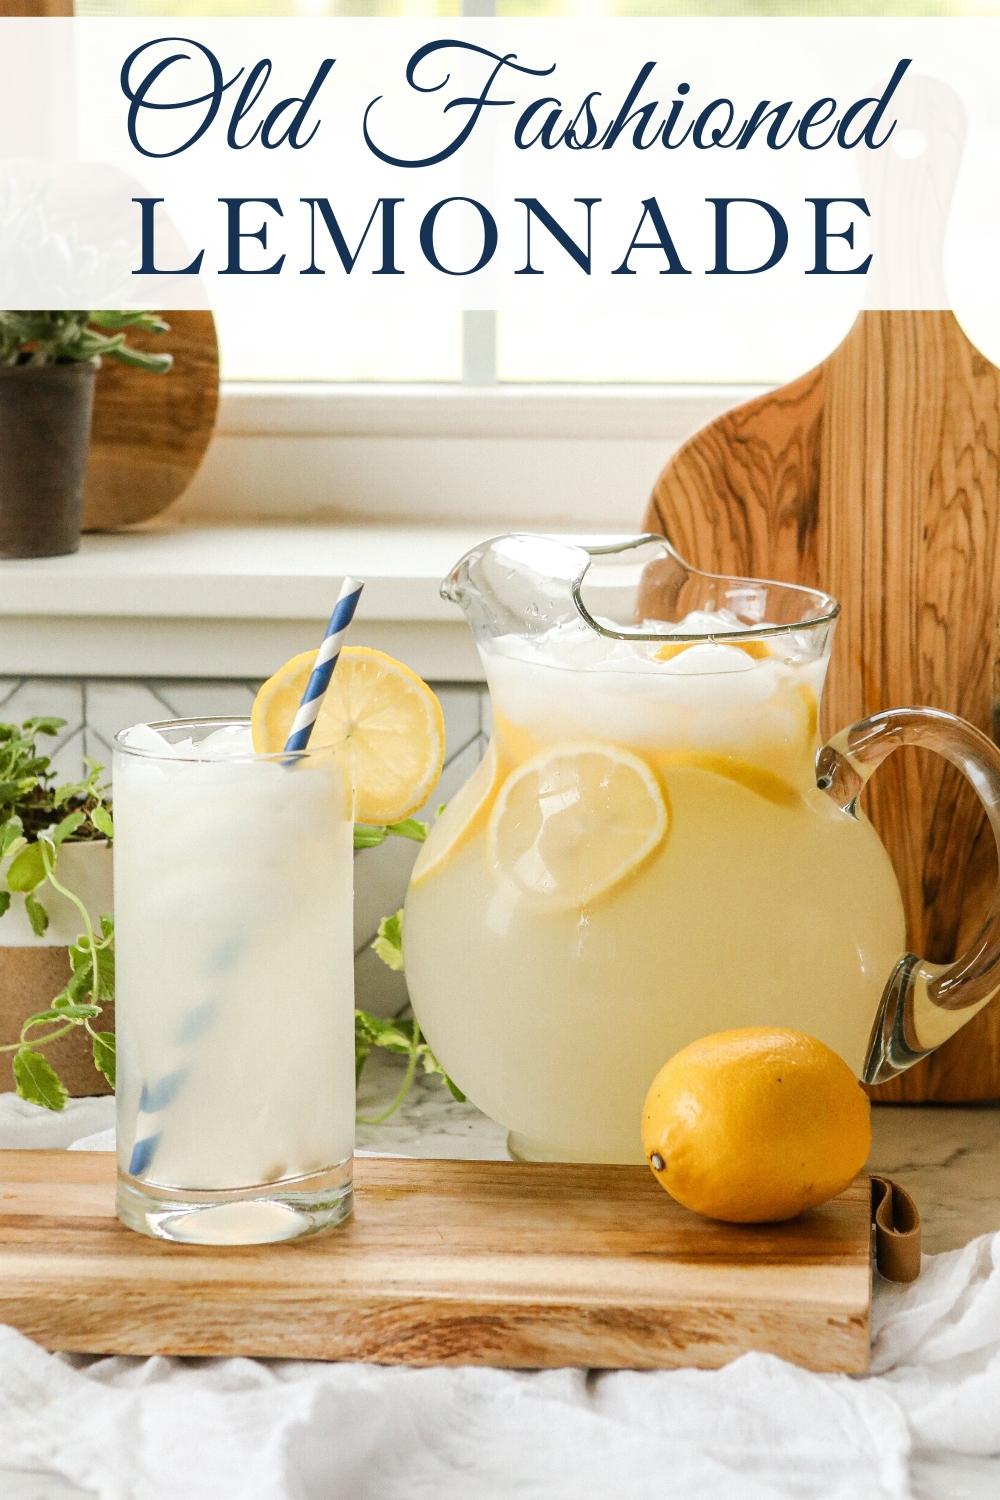 Recipe for Old Fashioned Lemonade